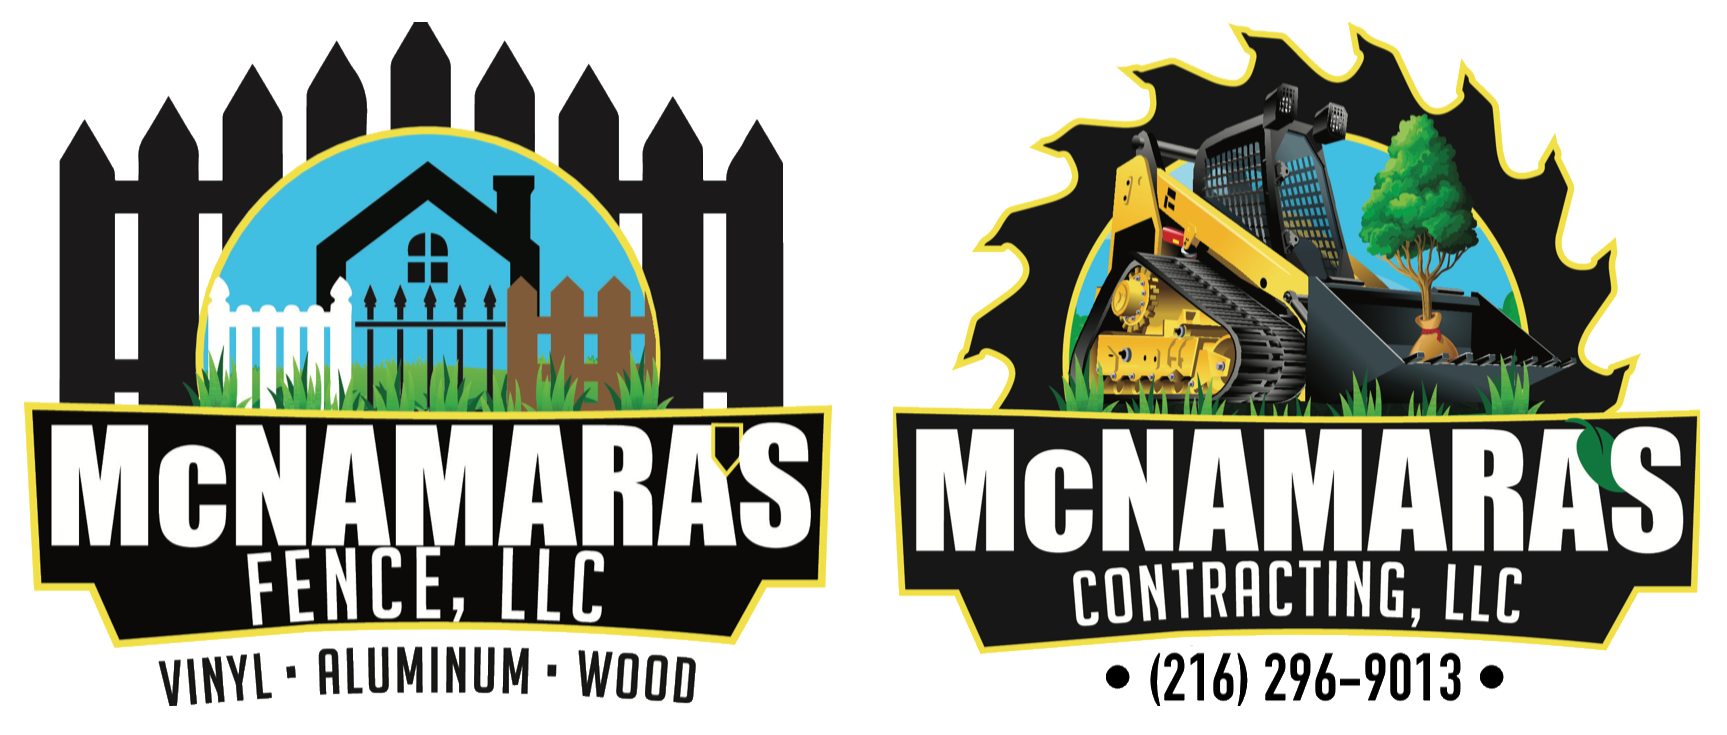 two logos for mcnamaras fence llc and mcnamaras contracting llc